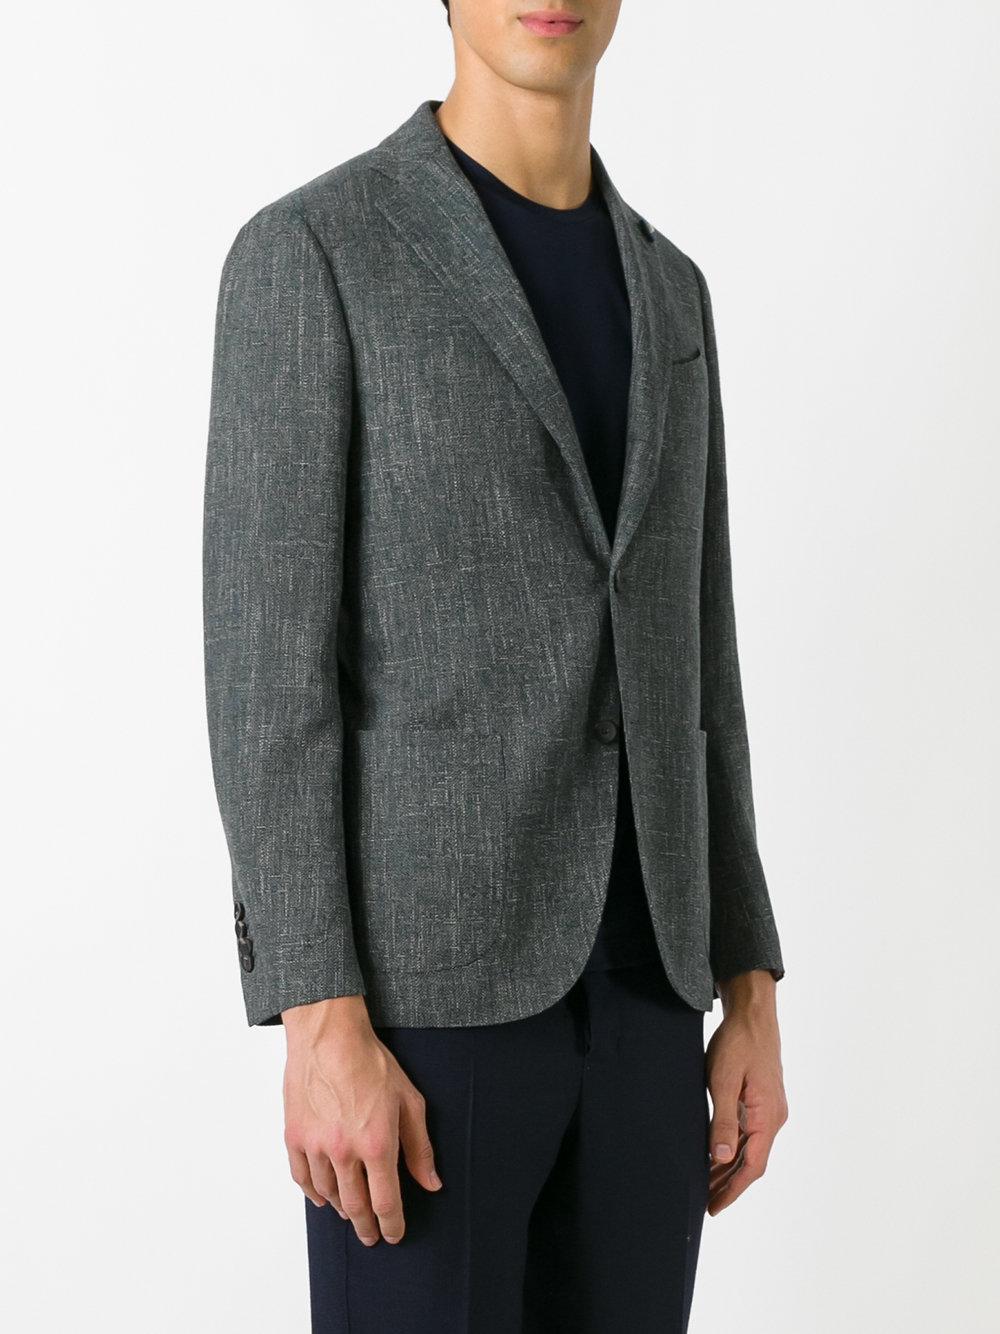 Lyst - Lardini Tweed Blazer in Gray for Men